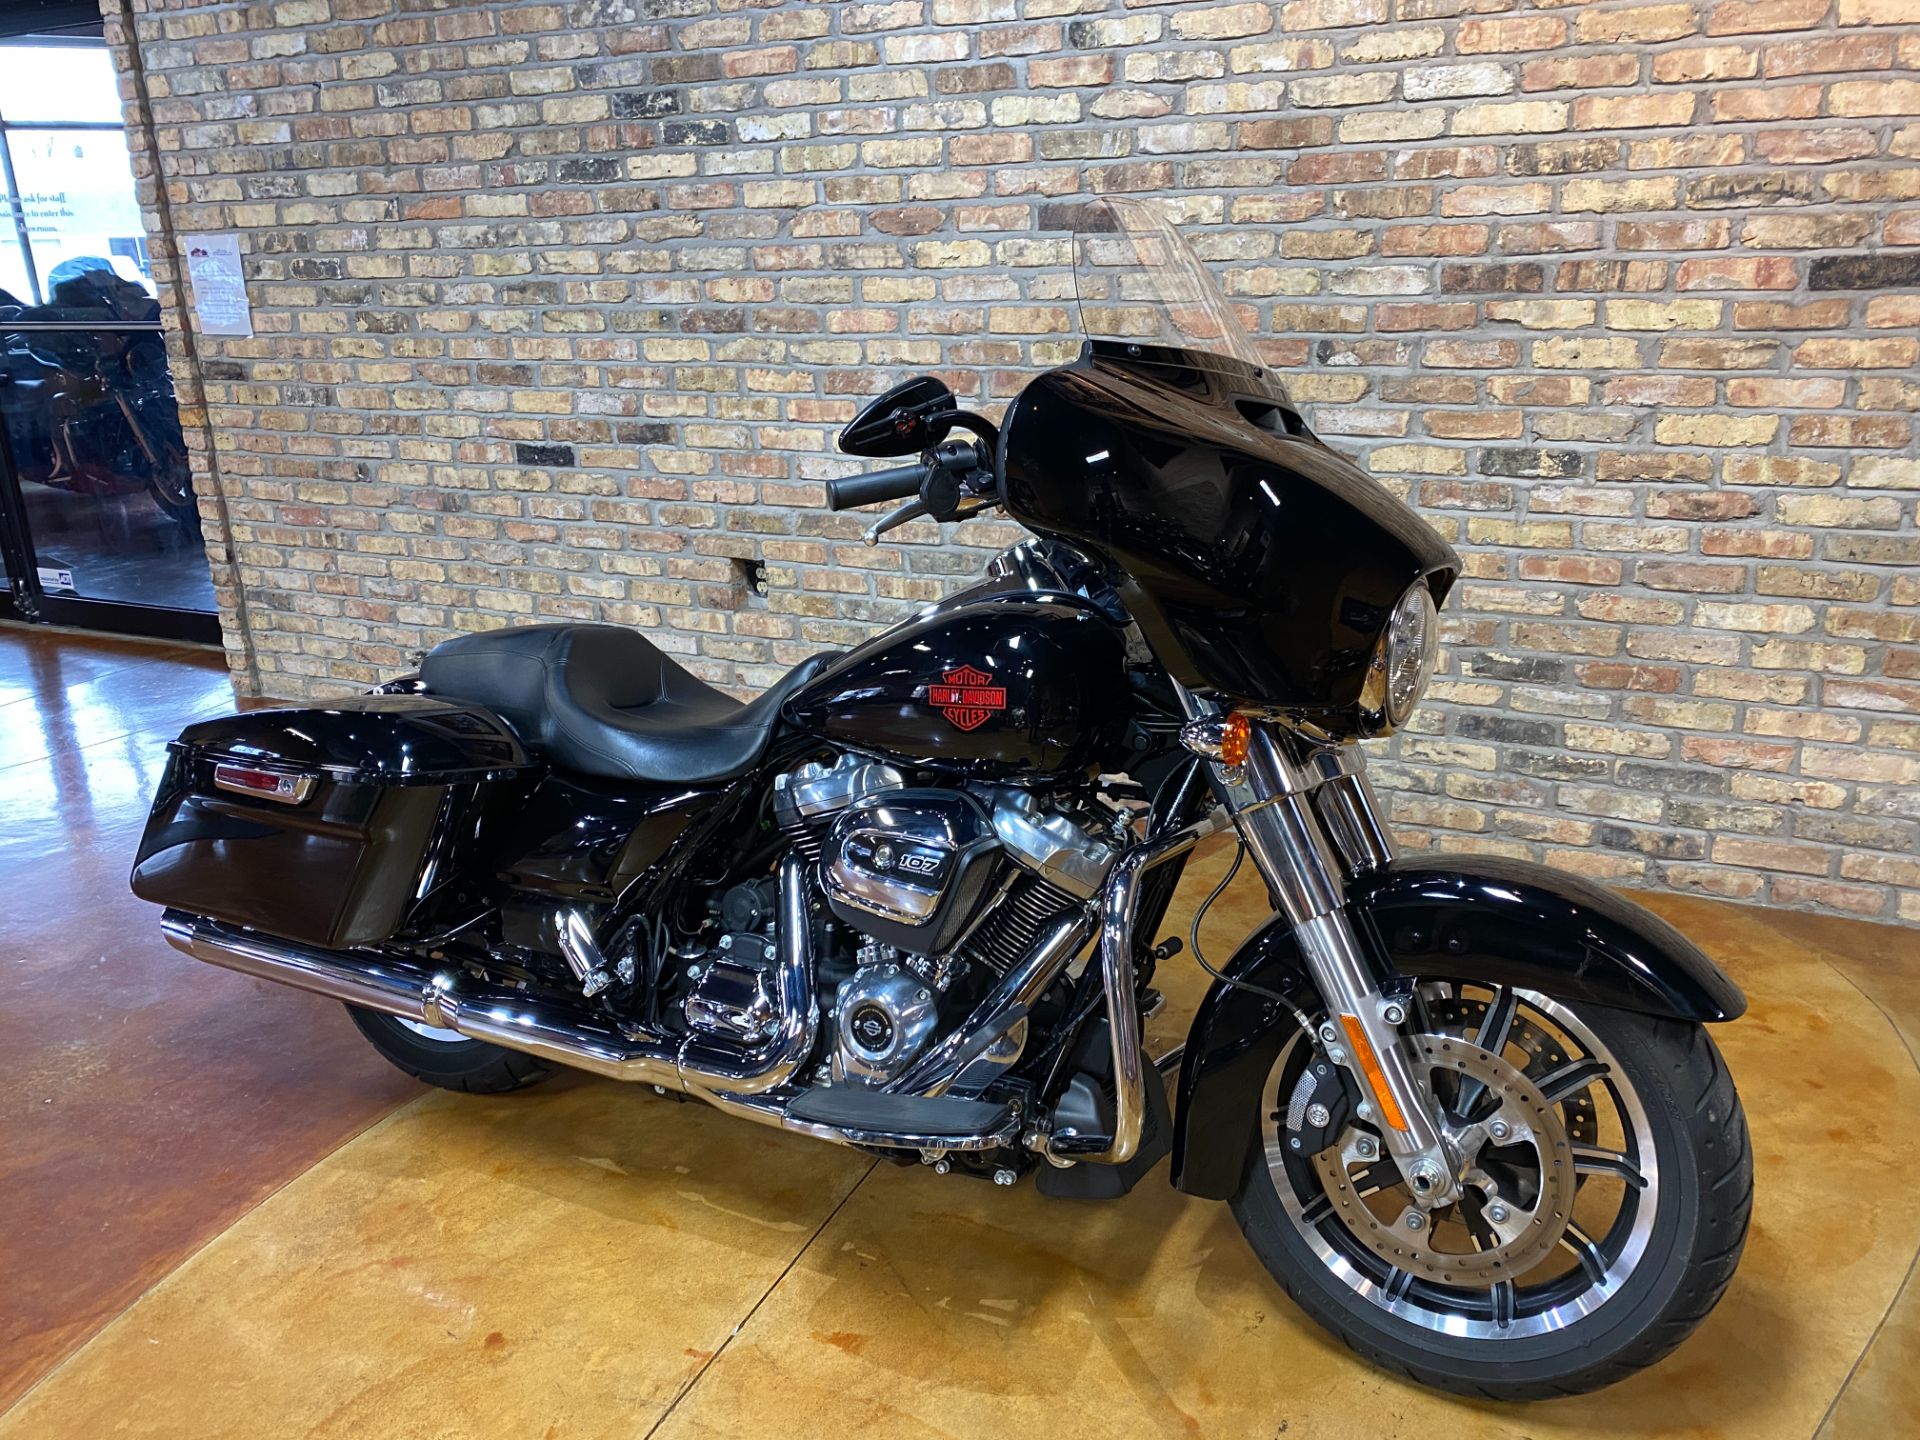 2019 Harley-Davidson Electra Glide® Standard in Big Bend, Wisconsin - Photo 3